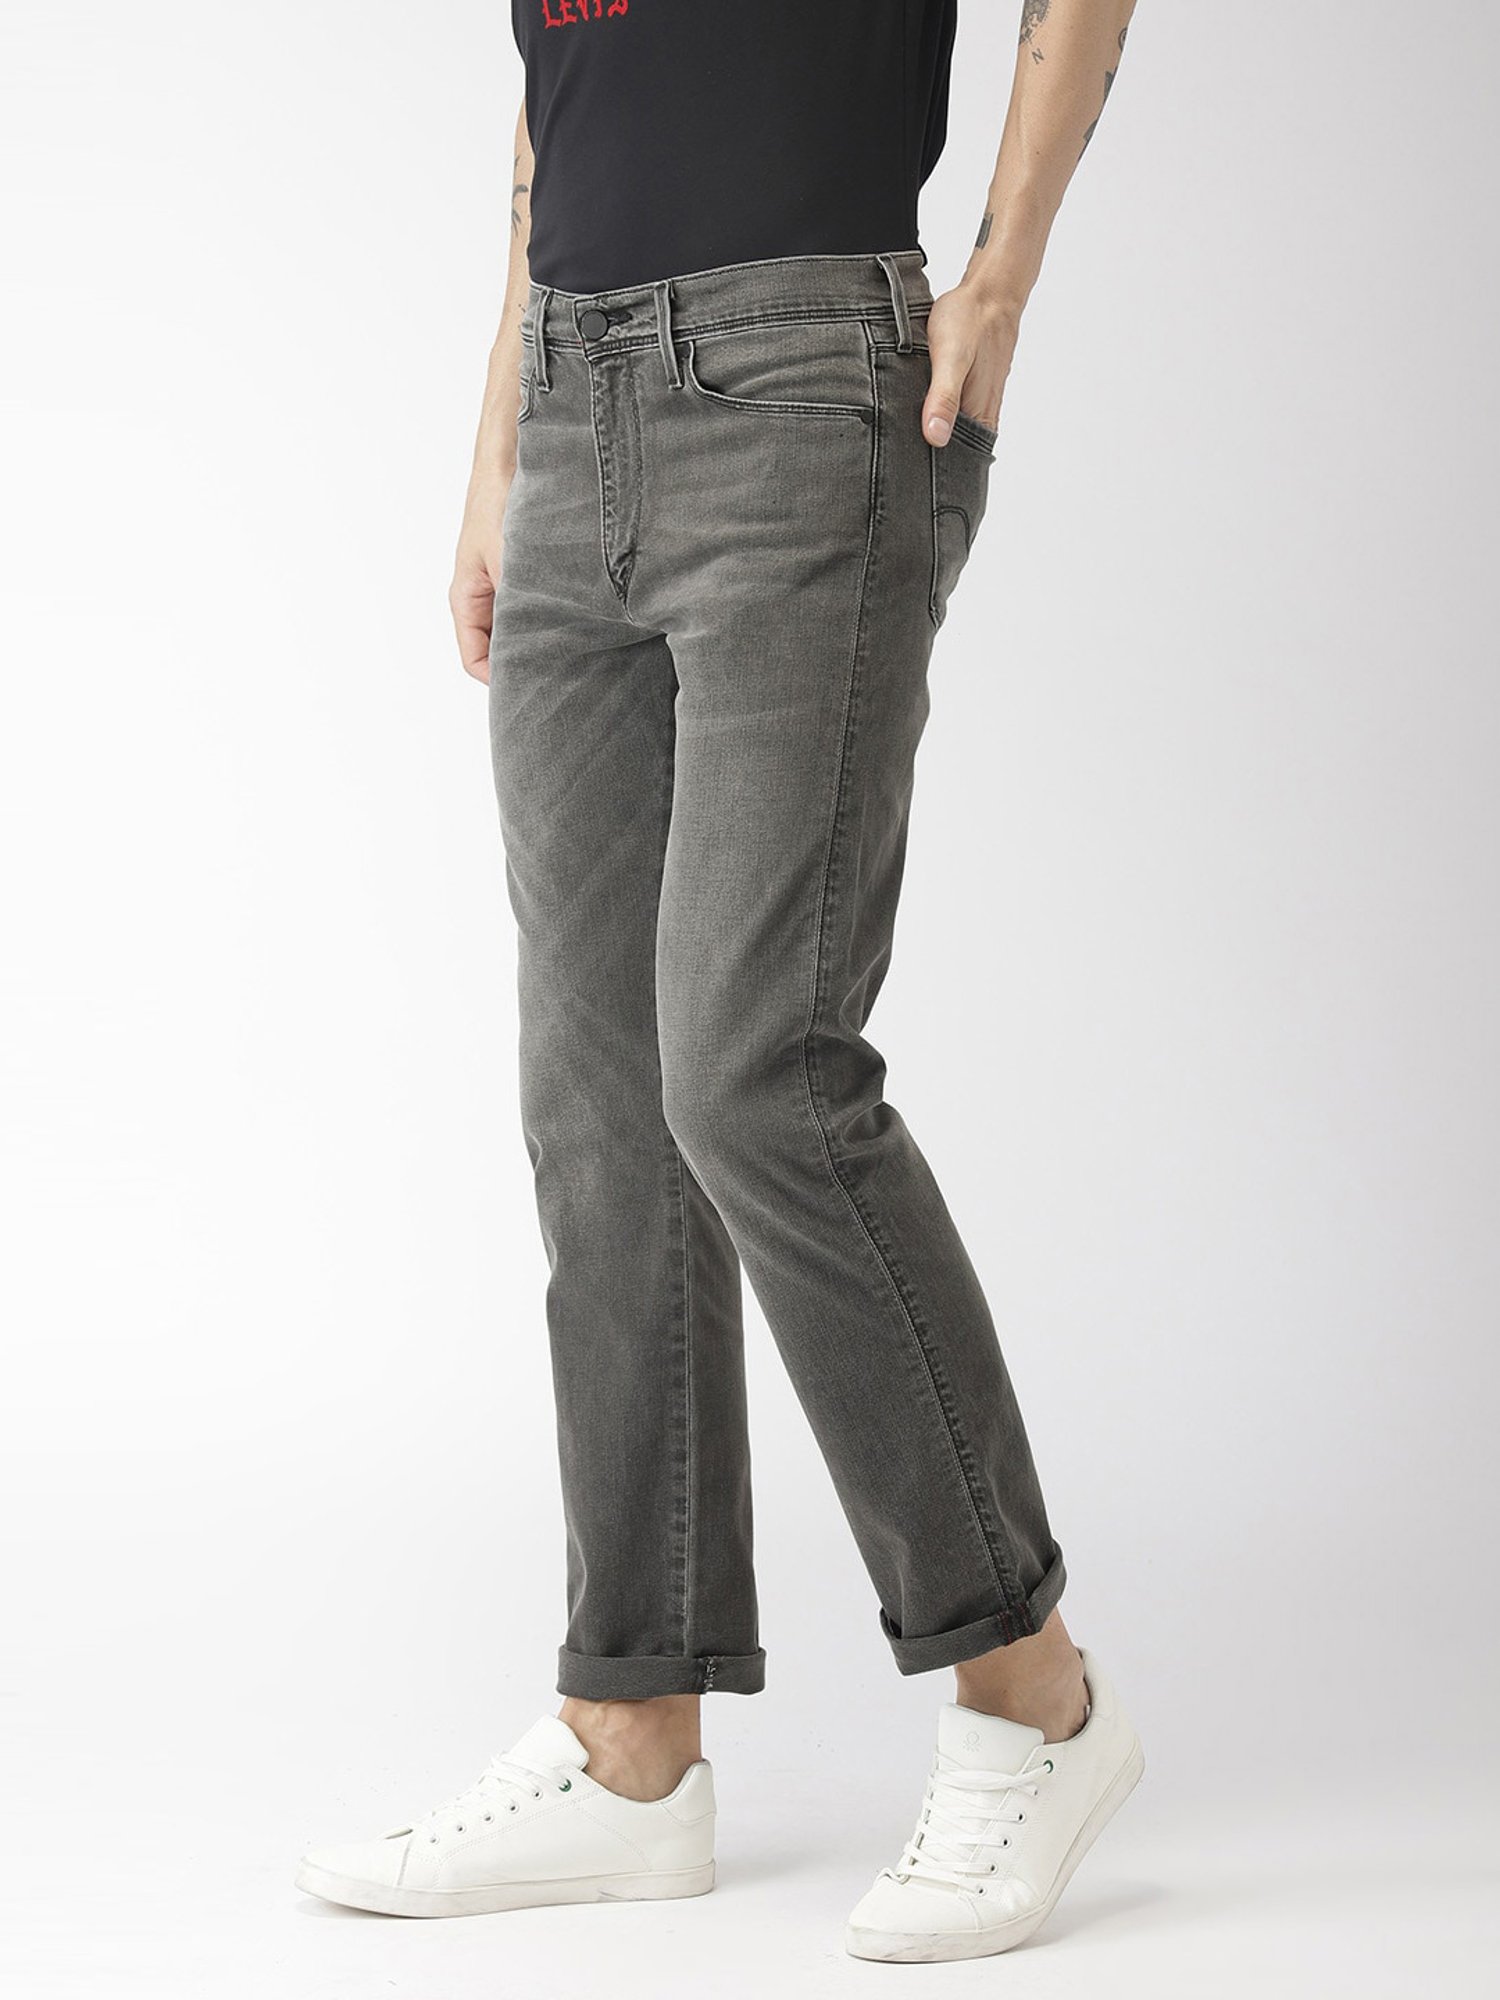 Buy Levi'S Dark Grey Cotton Straight Fit Jeans for Mens Online @ Tata CLiQ